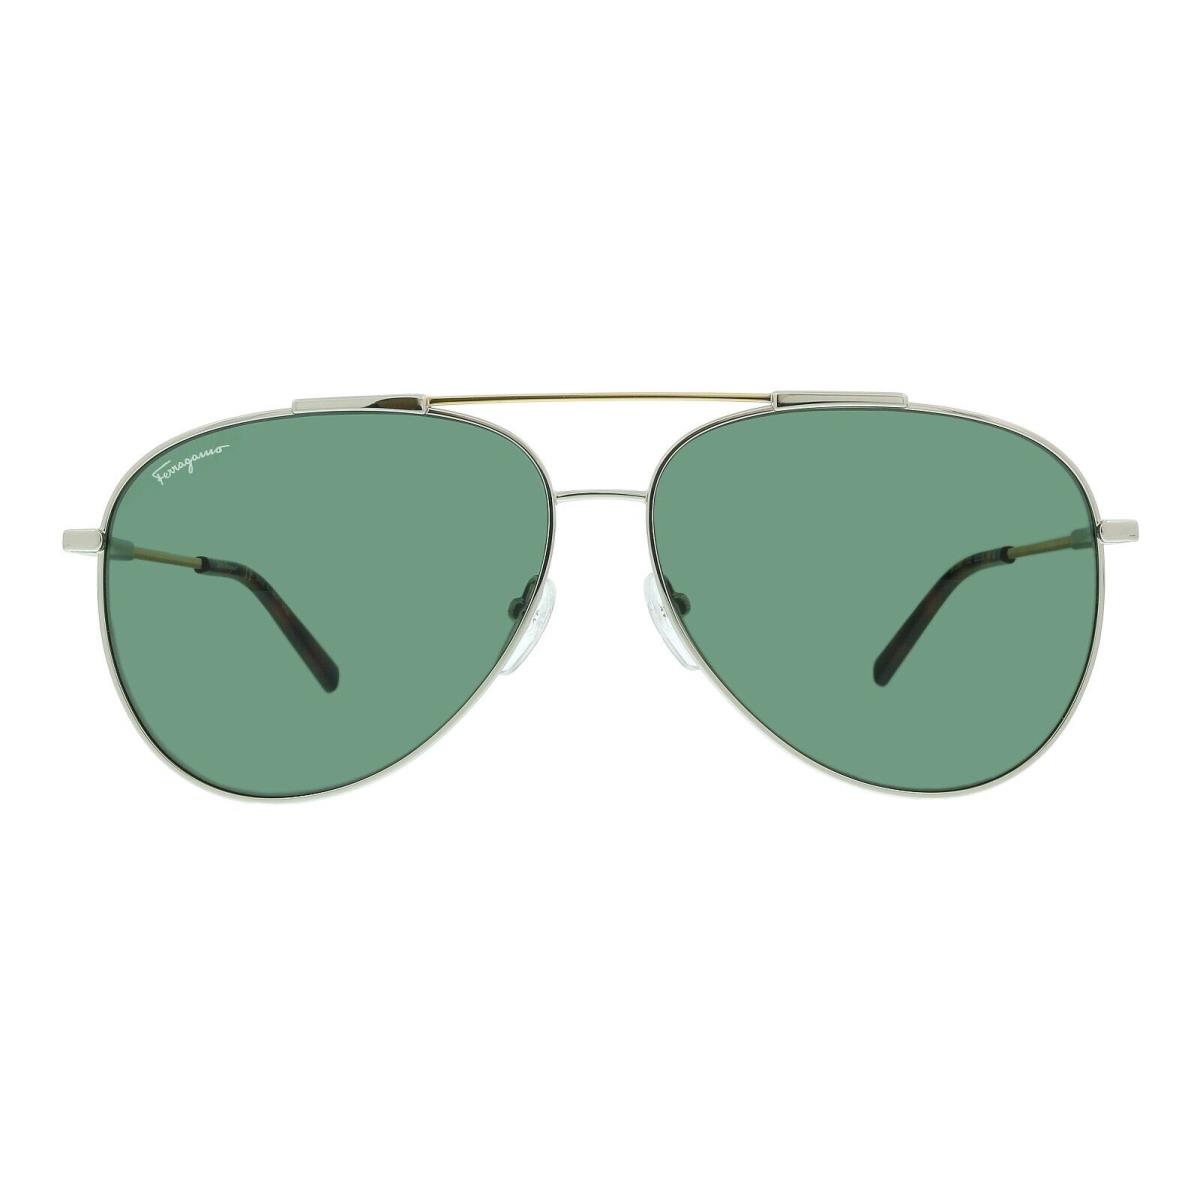 Salvatore Ferragamo sunglasses  - Gold Tortoise Frame, Green Lens 0